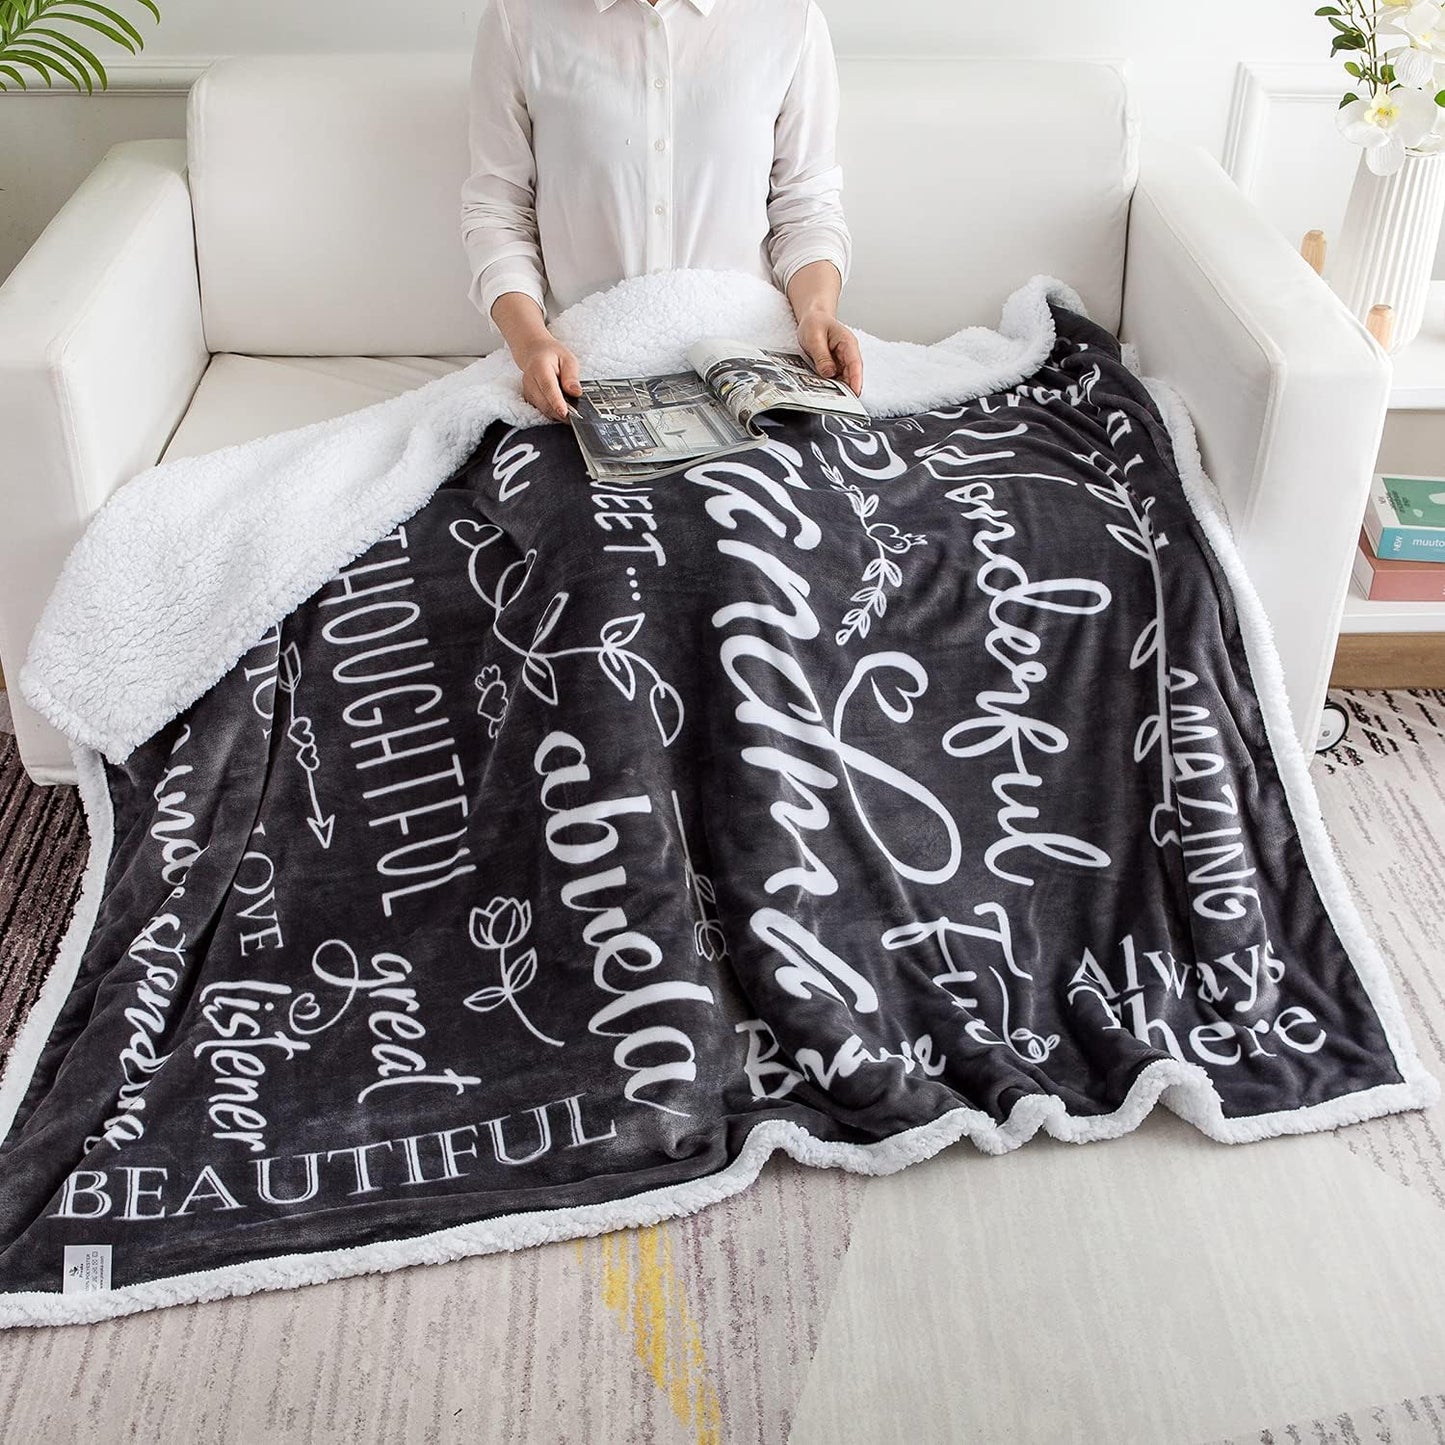 Wonderful Grandma Blanket: Inspiring Words Printed for You